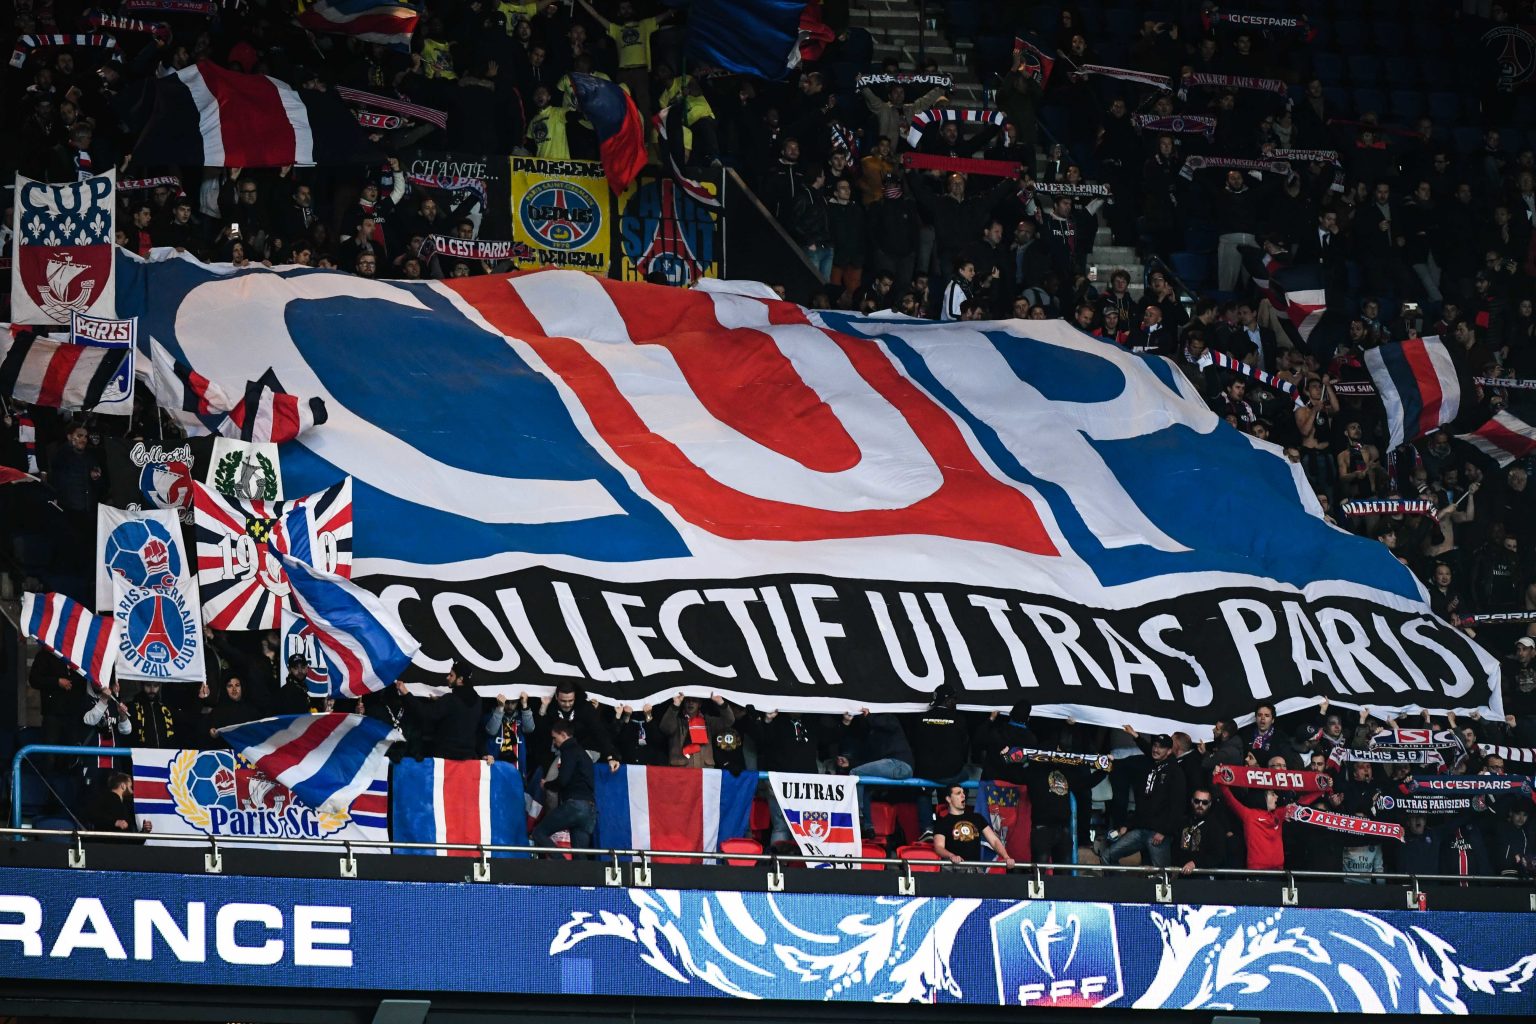 Citypsg Le Message Du Collectif Ultras Paris La Rage De Vaincre